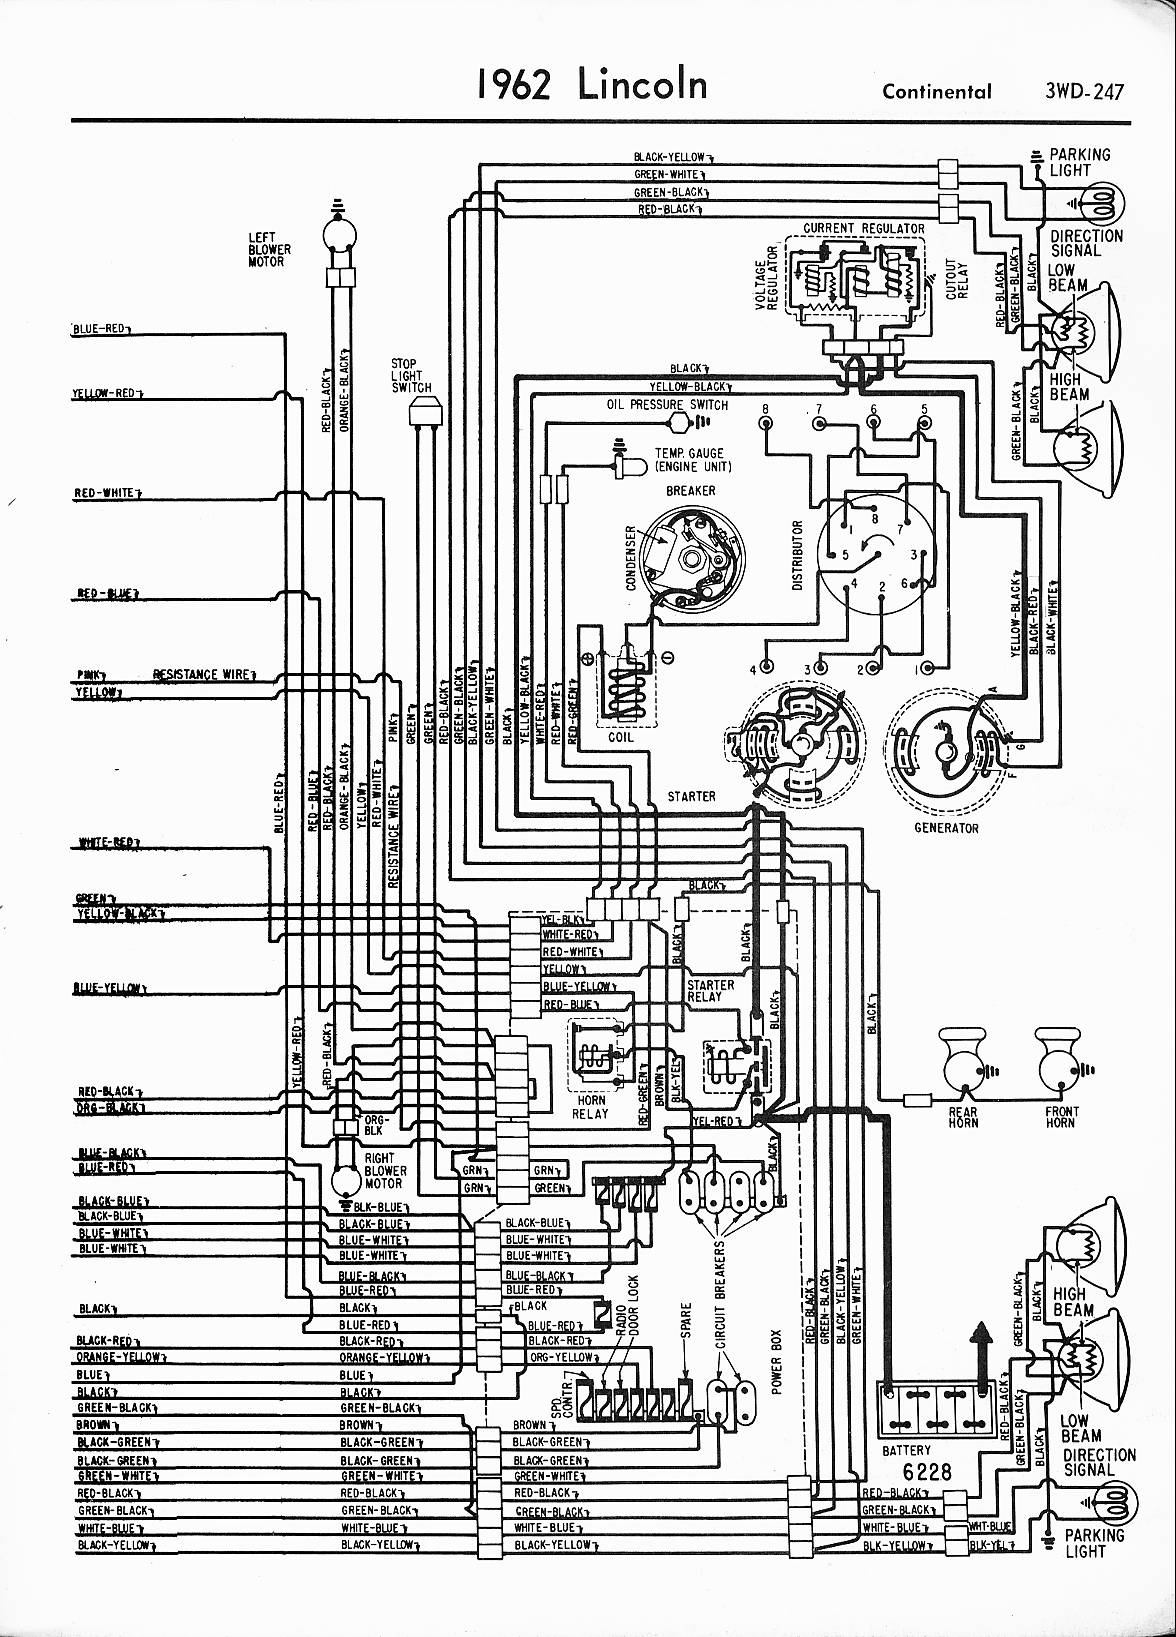 Lincoln Wiring Diagrams: 1957 - 1965 67 lincoln continental fuse box location 